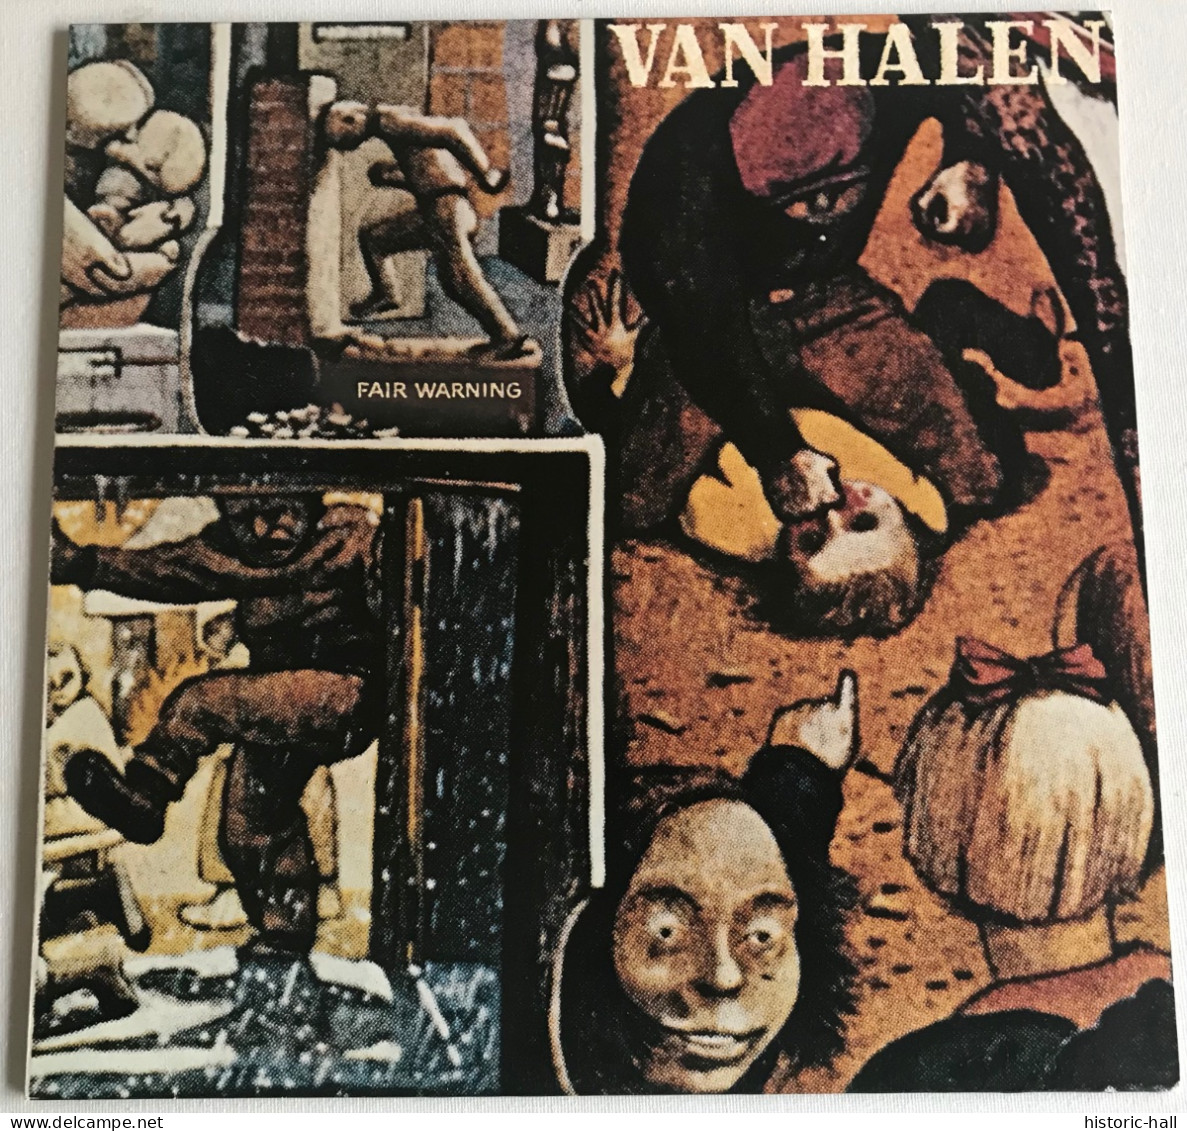 VAN HALEN - Fair Warning - LP - 1981 - German Press - Hard Rock & Metal